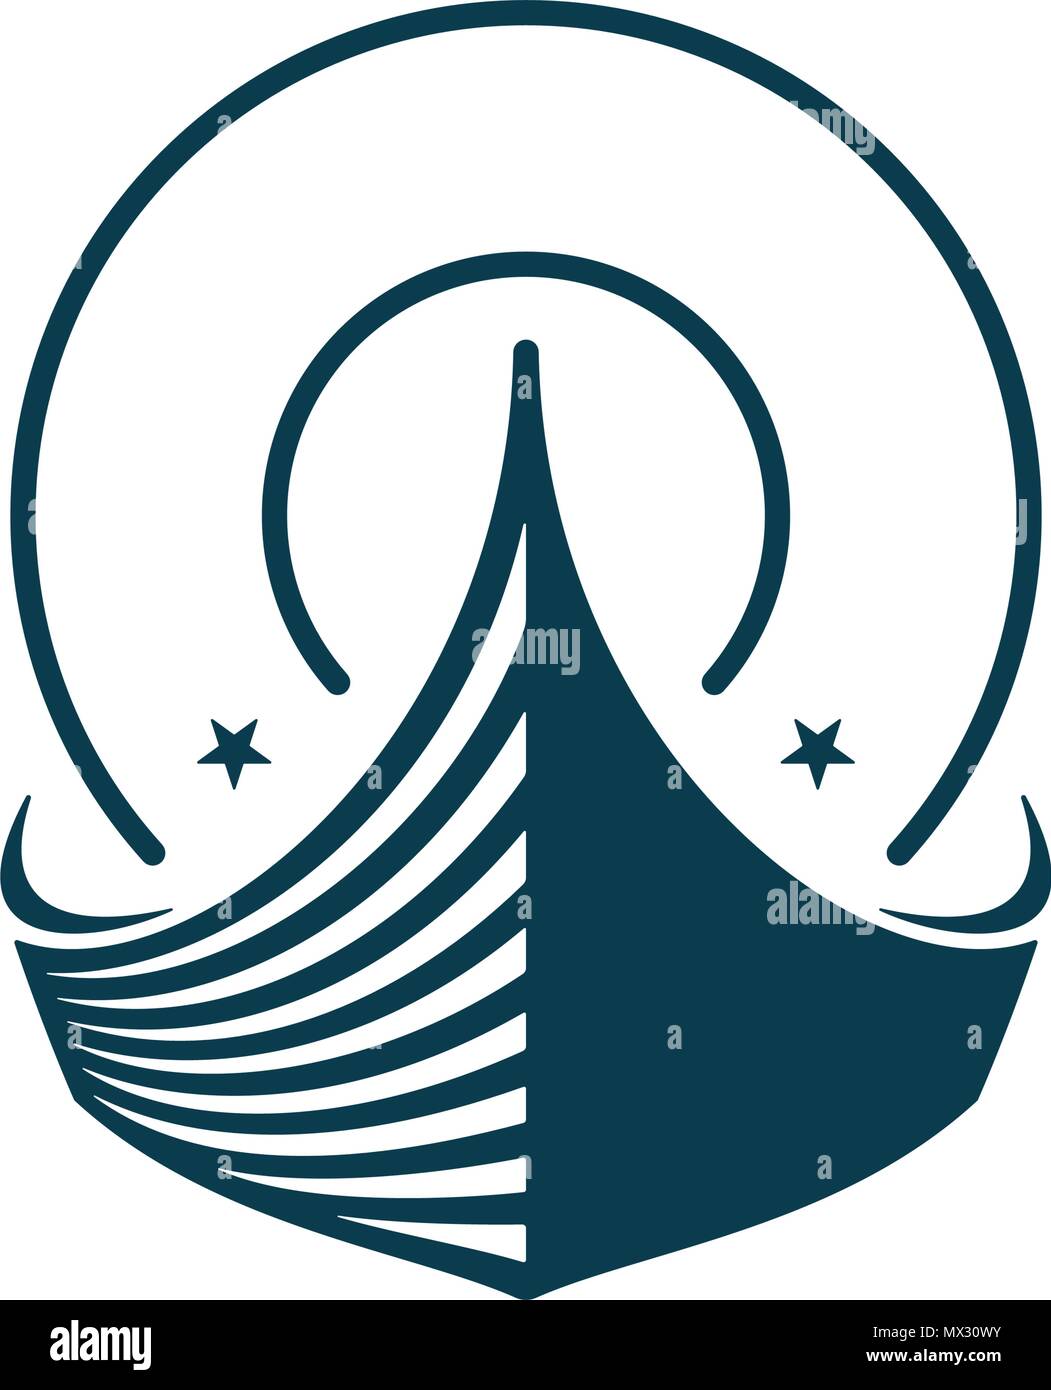 Holz- Boot auf weißem Hintergrund. Vector Illustration Logos. Stock Vektor